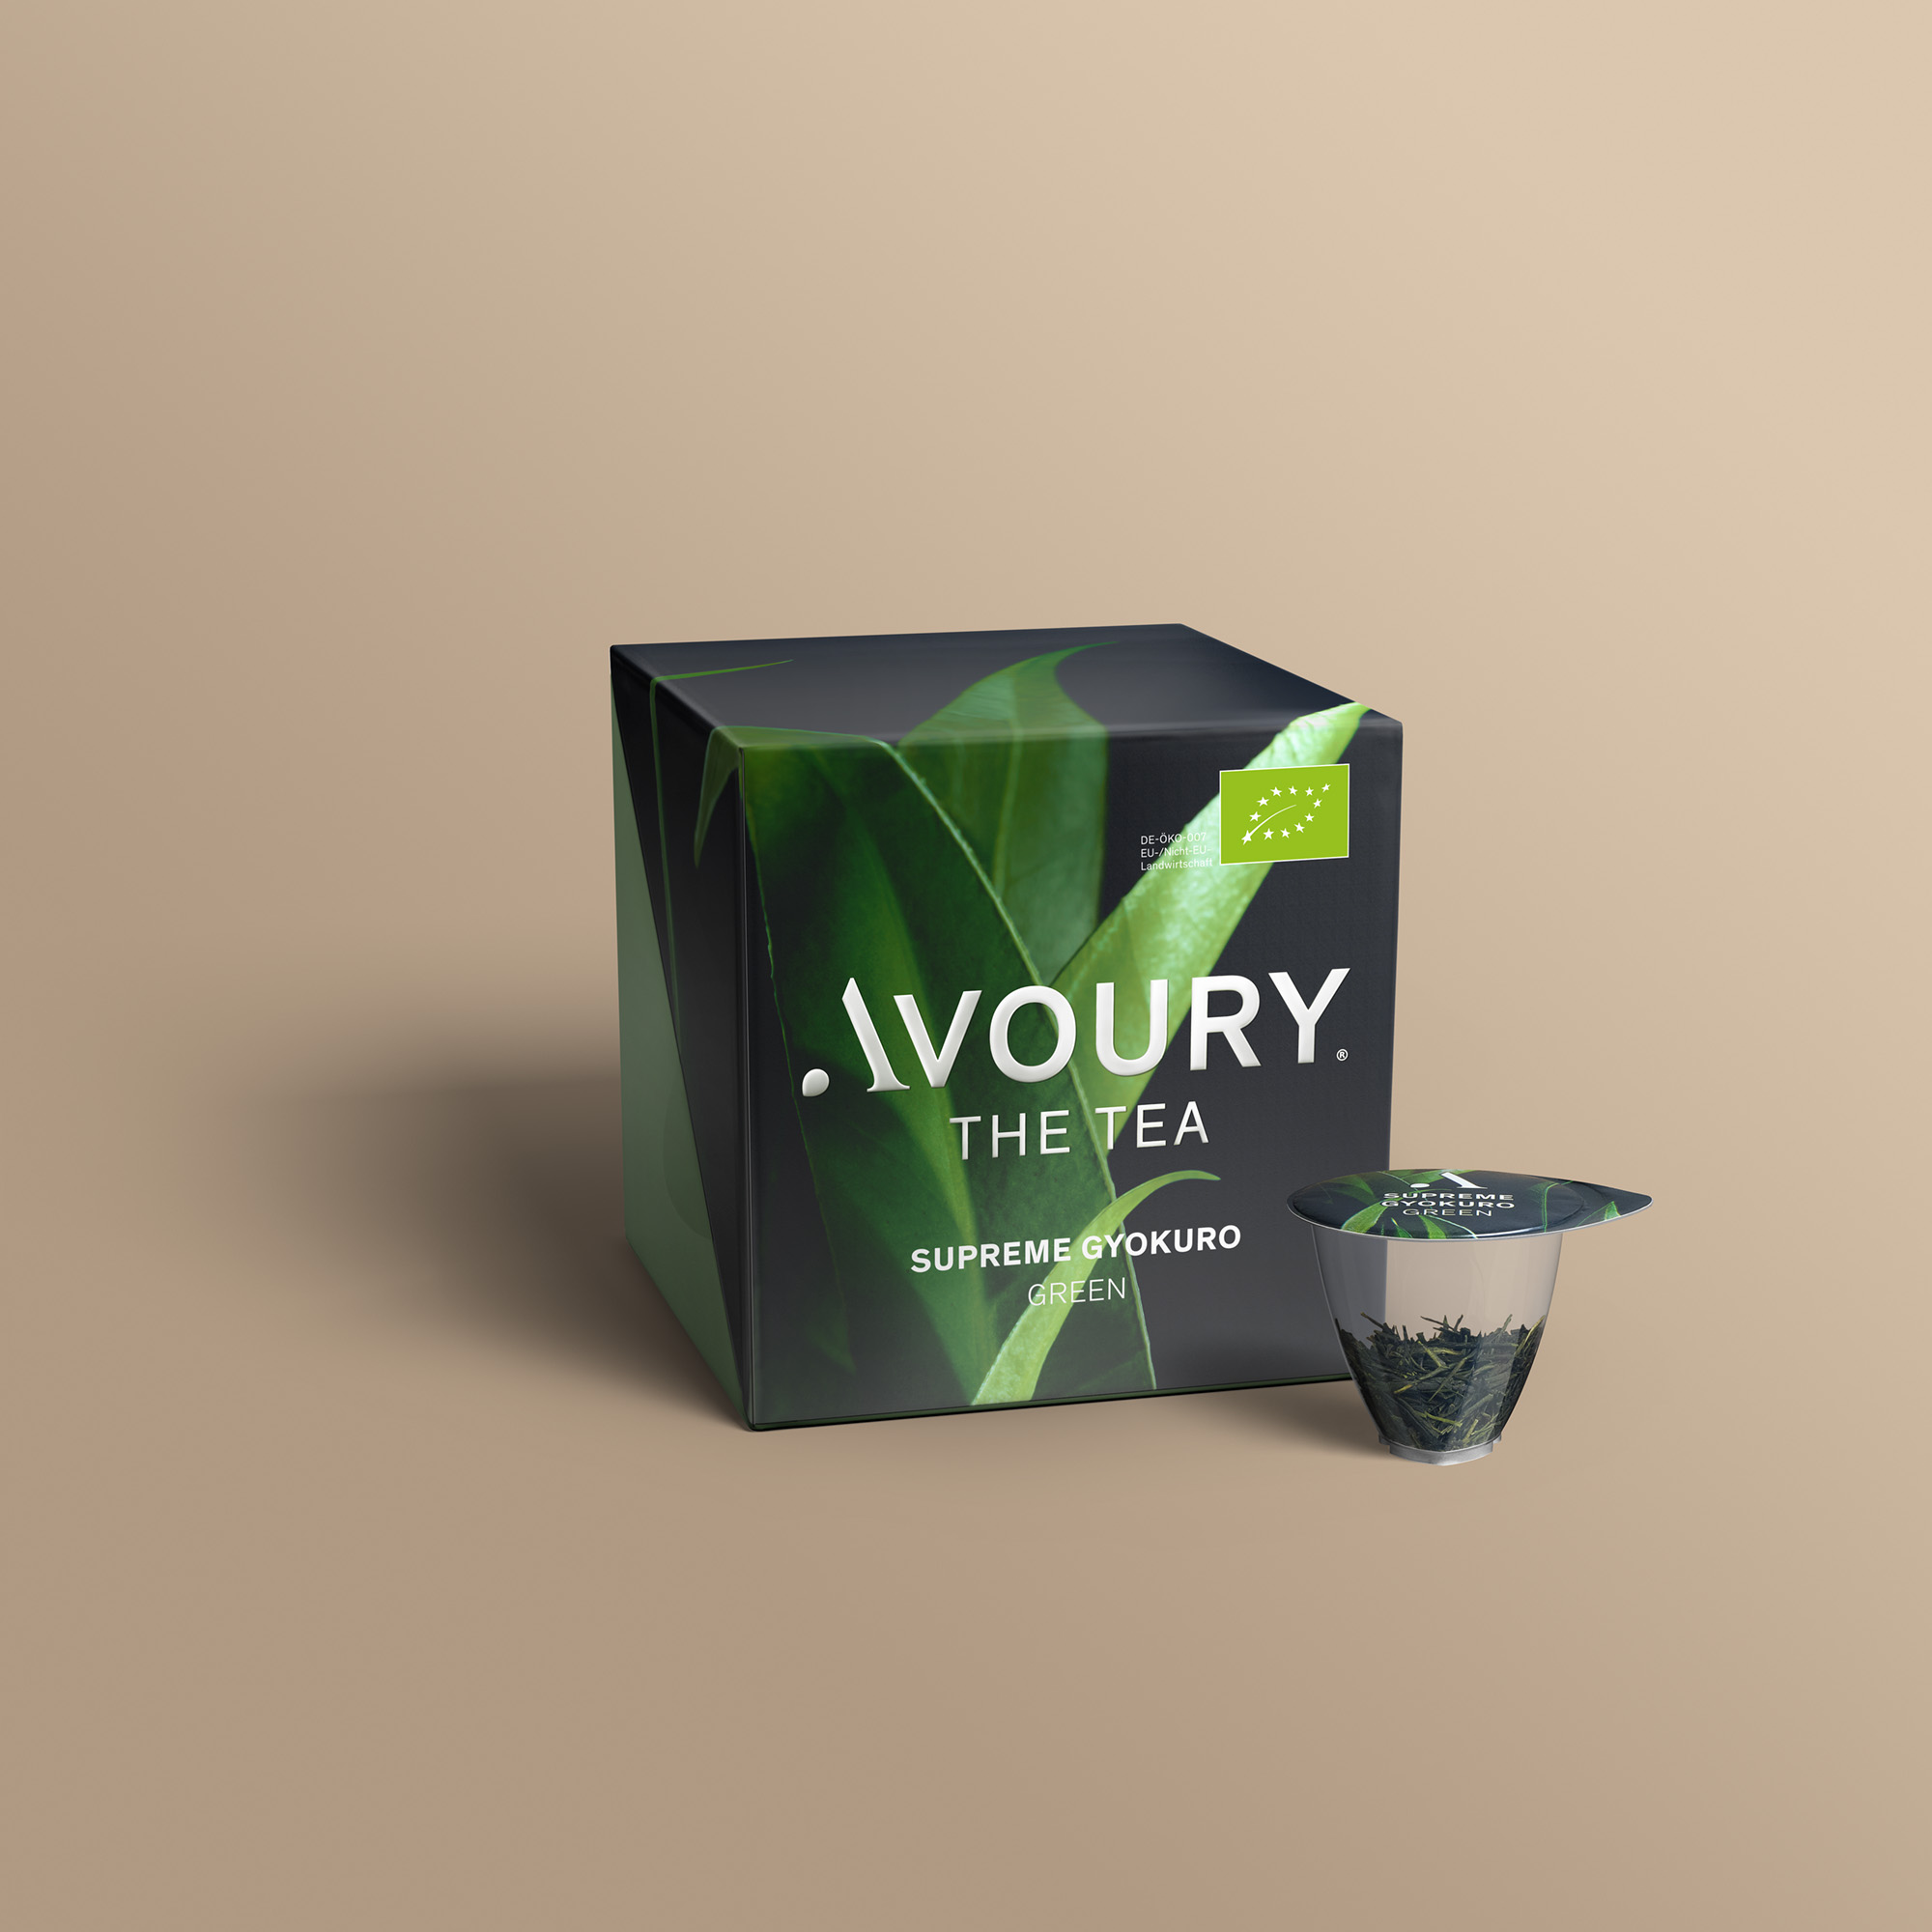 Supreme Gyokuro  | Avoury. The Tea.